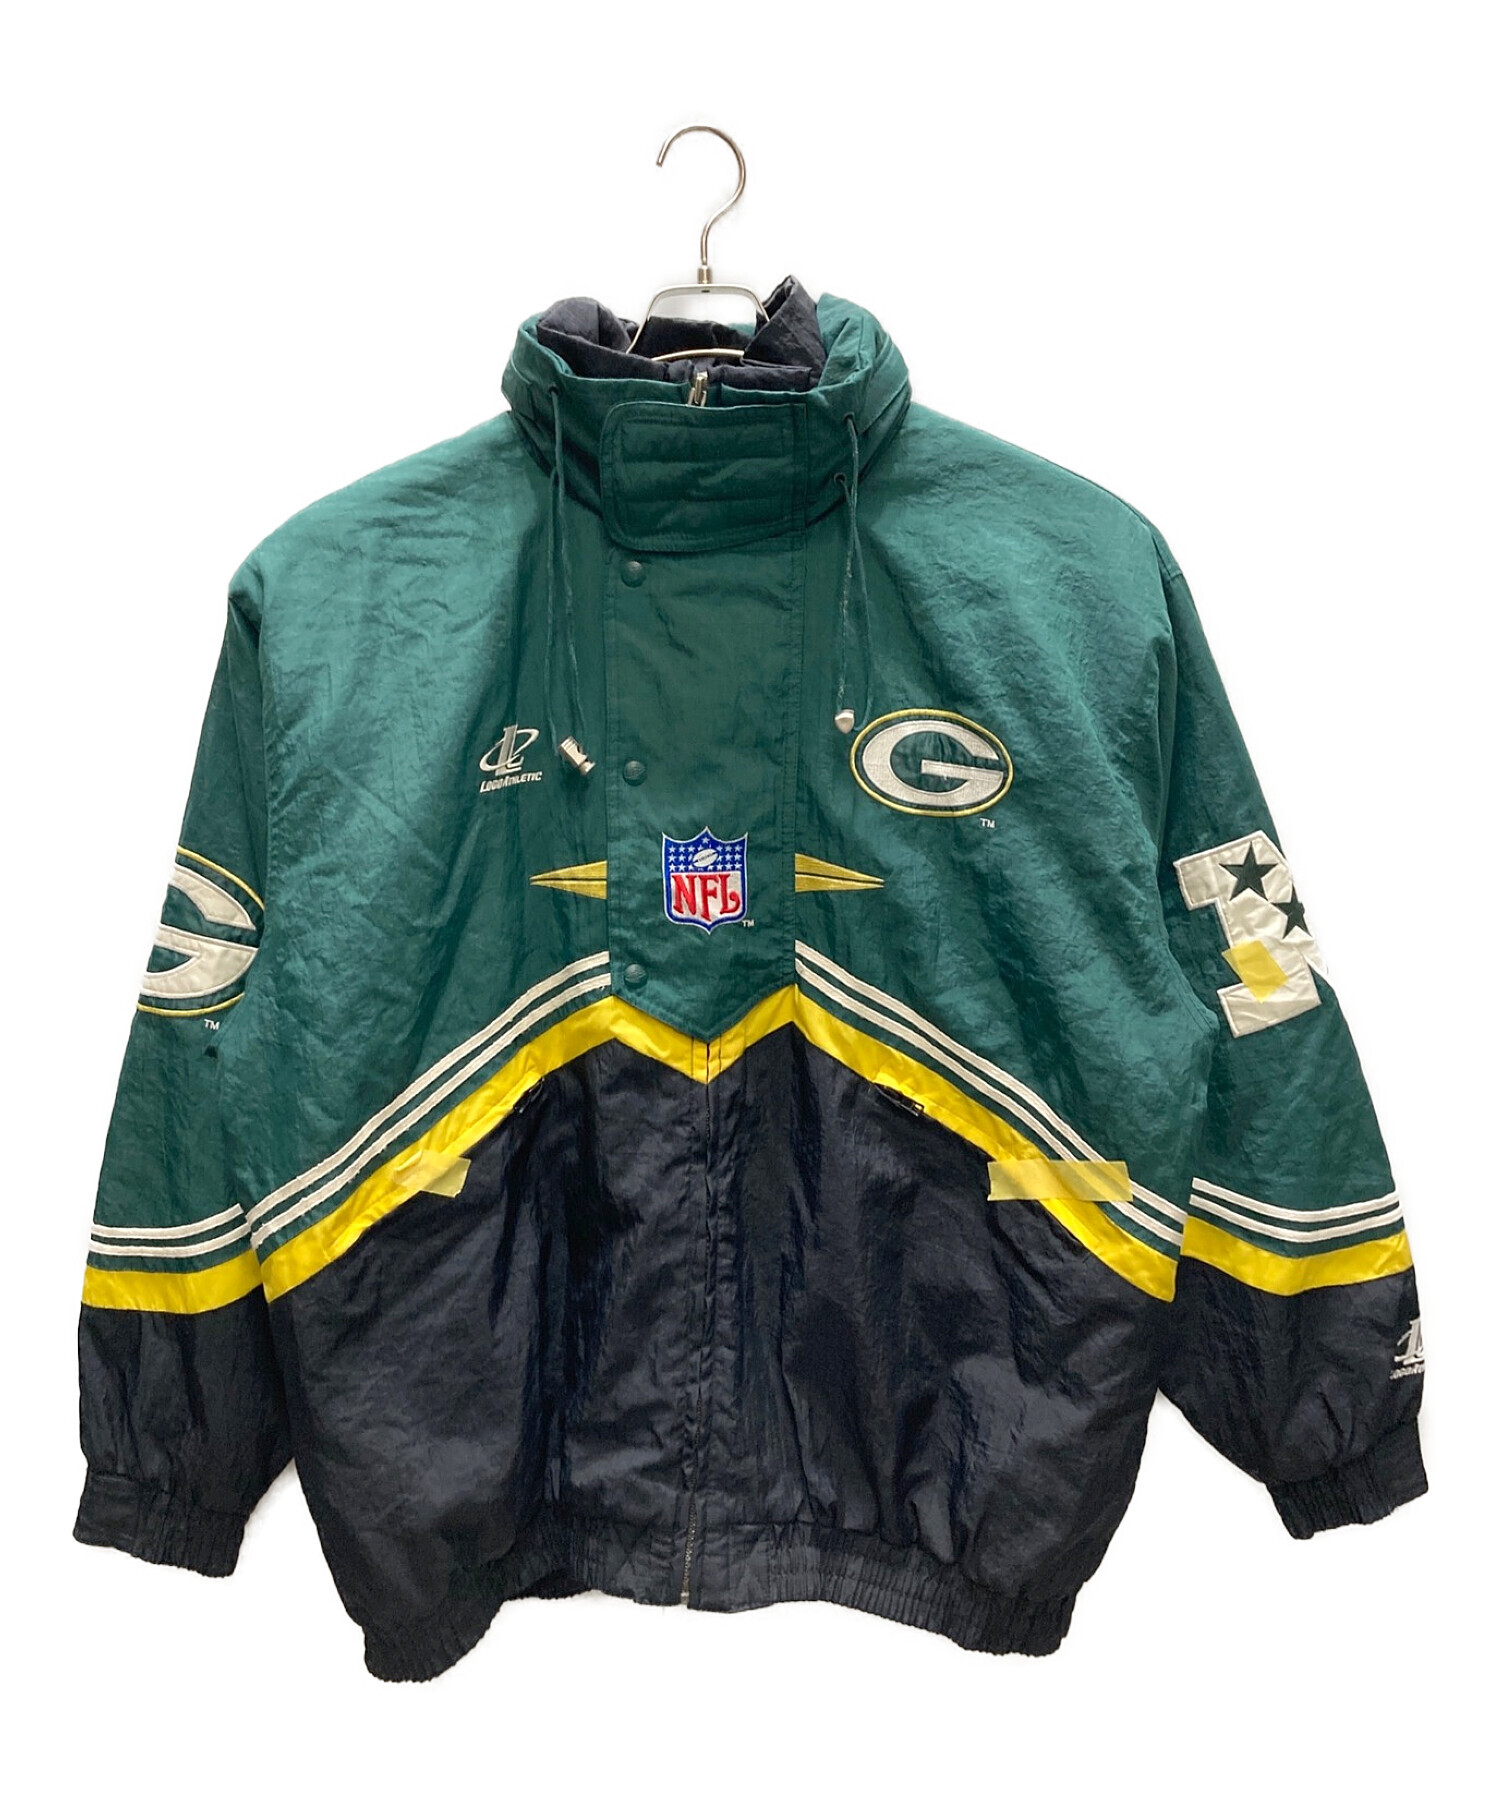 NFL (ナショナル・フットボール・リーグ) チームジャケット グリーン サイズ:XL